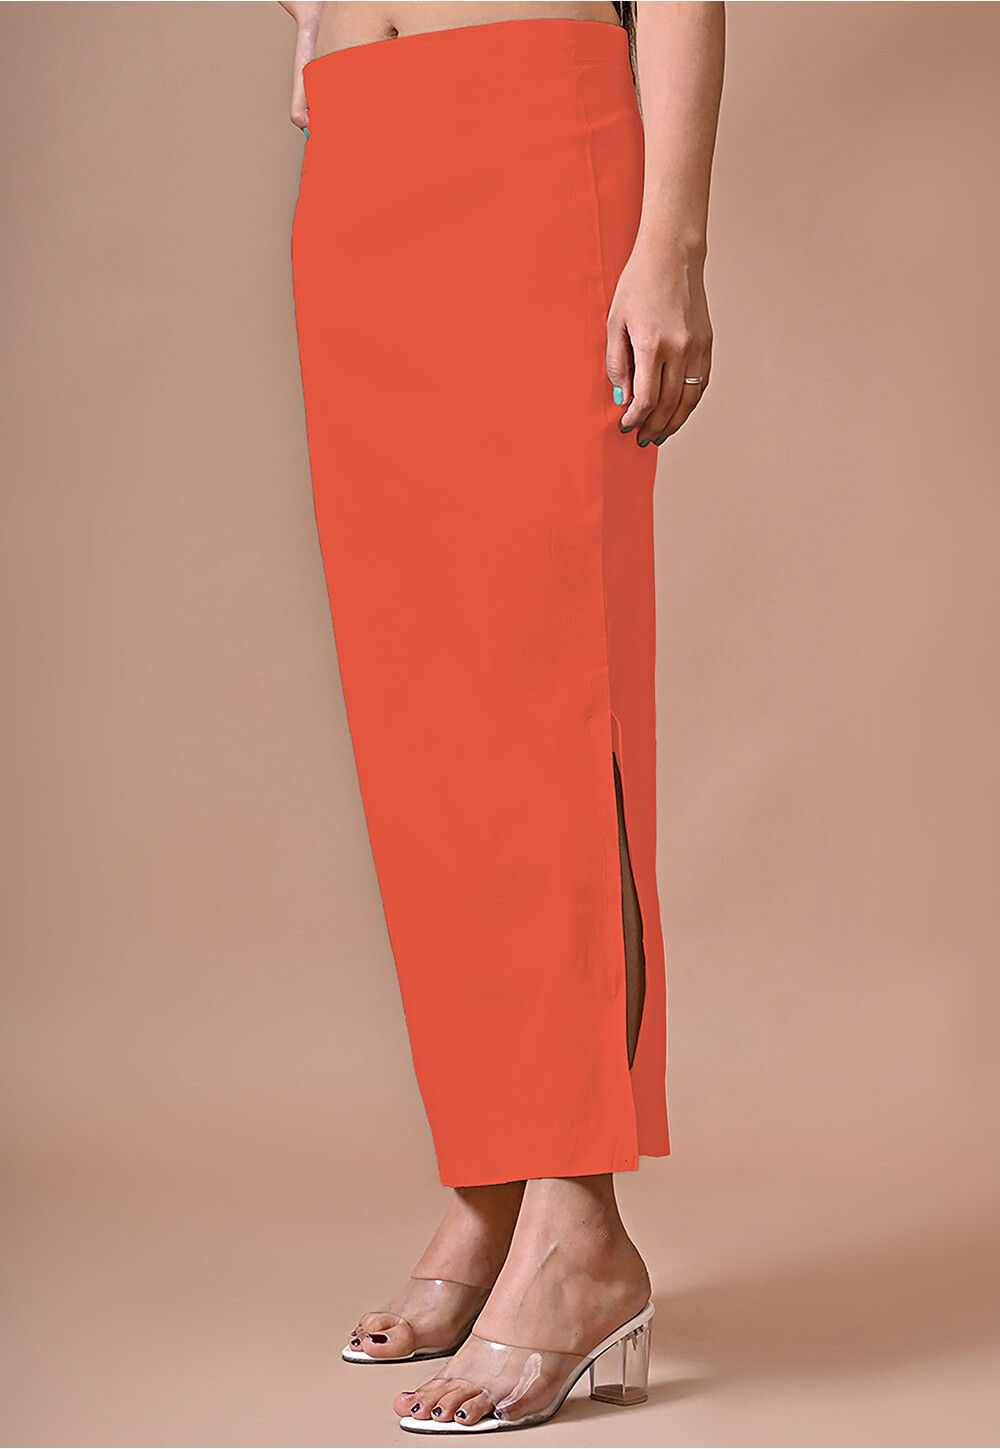 Solid Color Lycra Cotton Shapewear Petticoat in Fuchsia